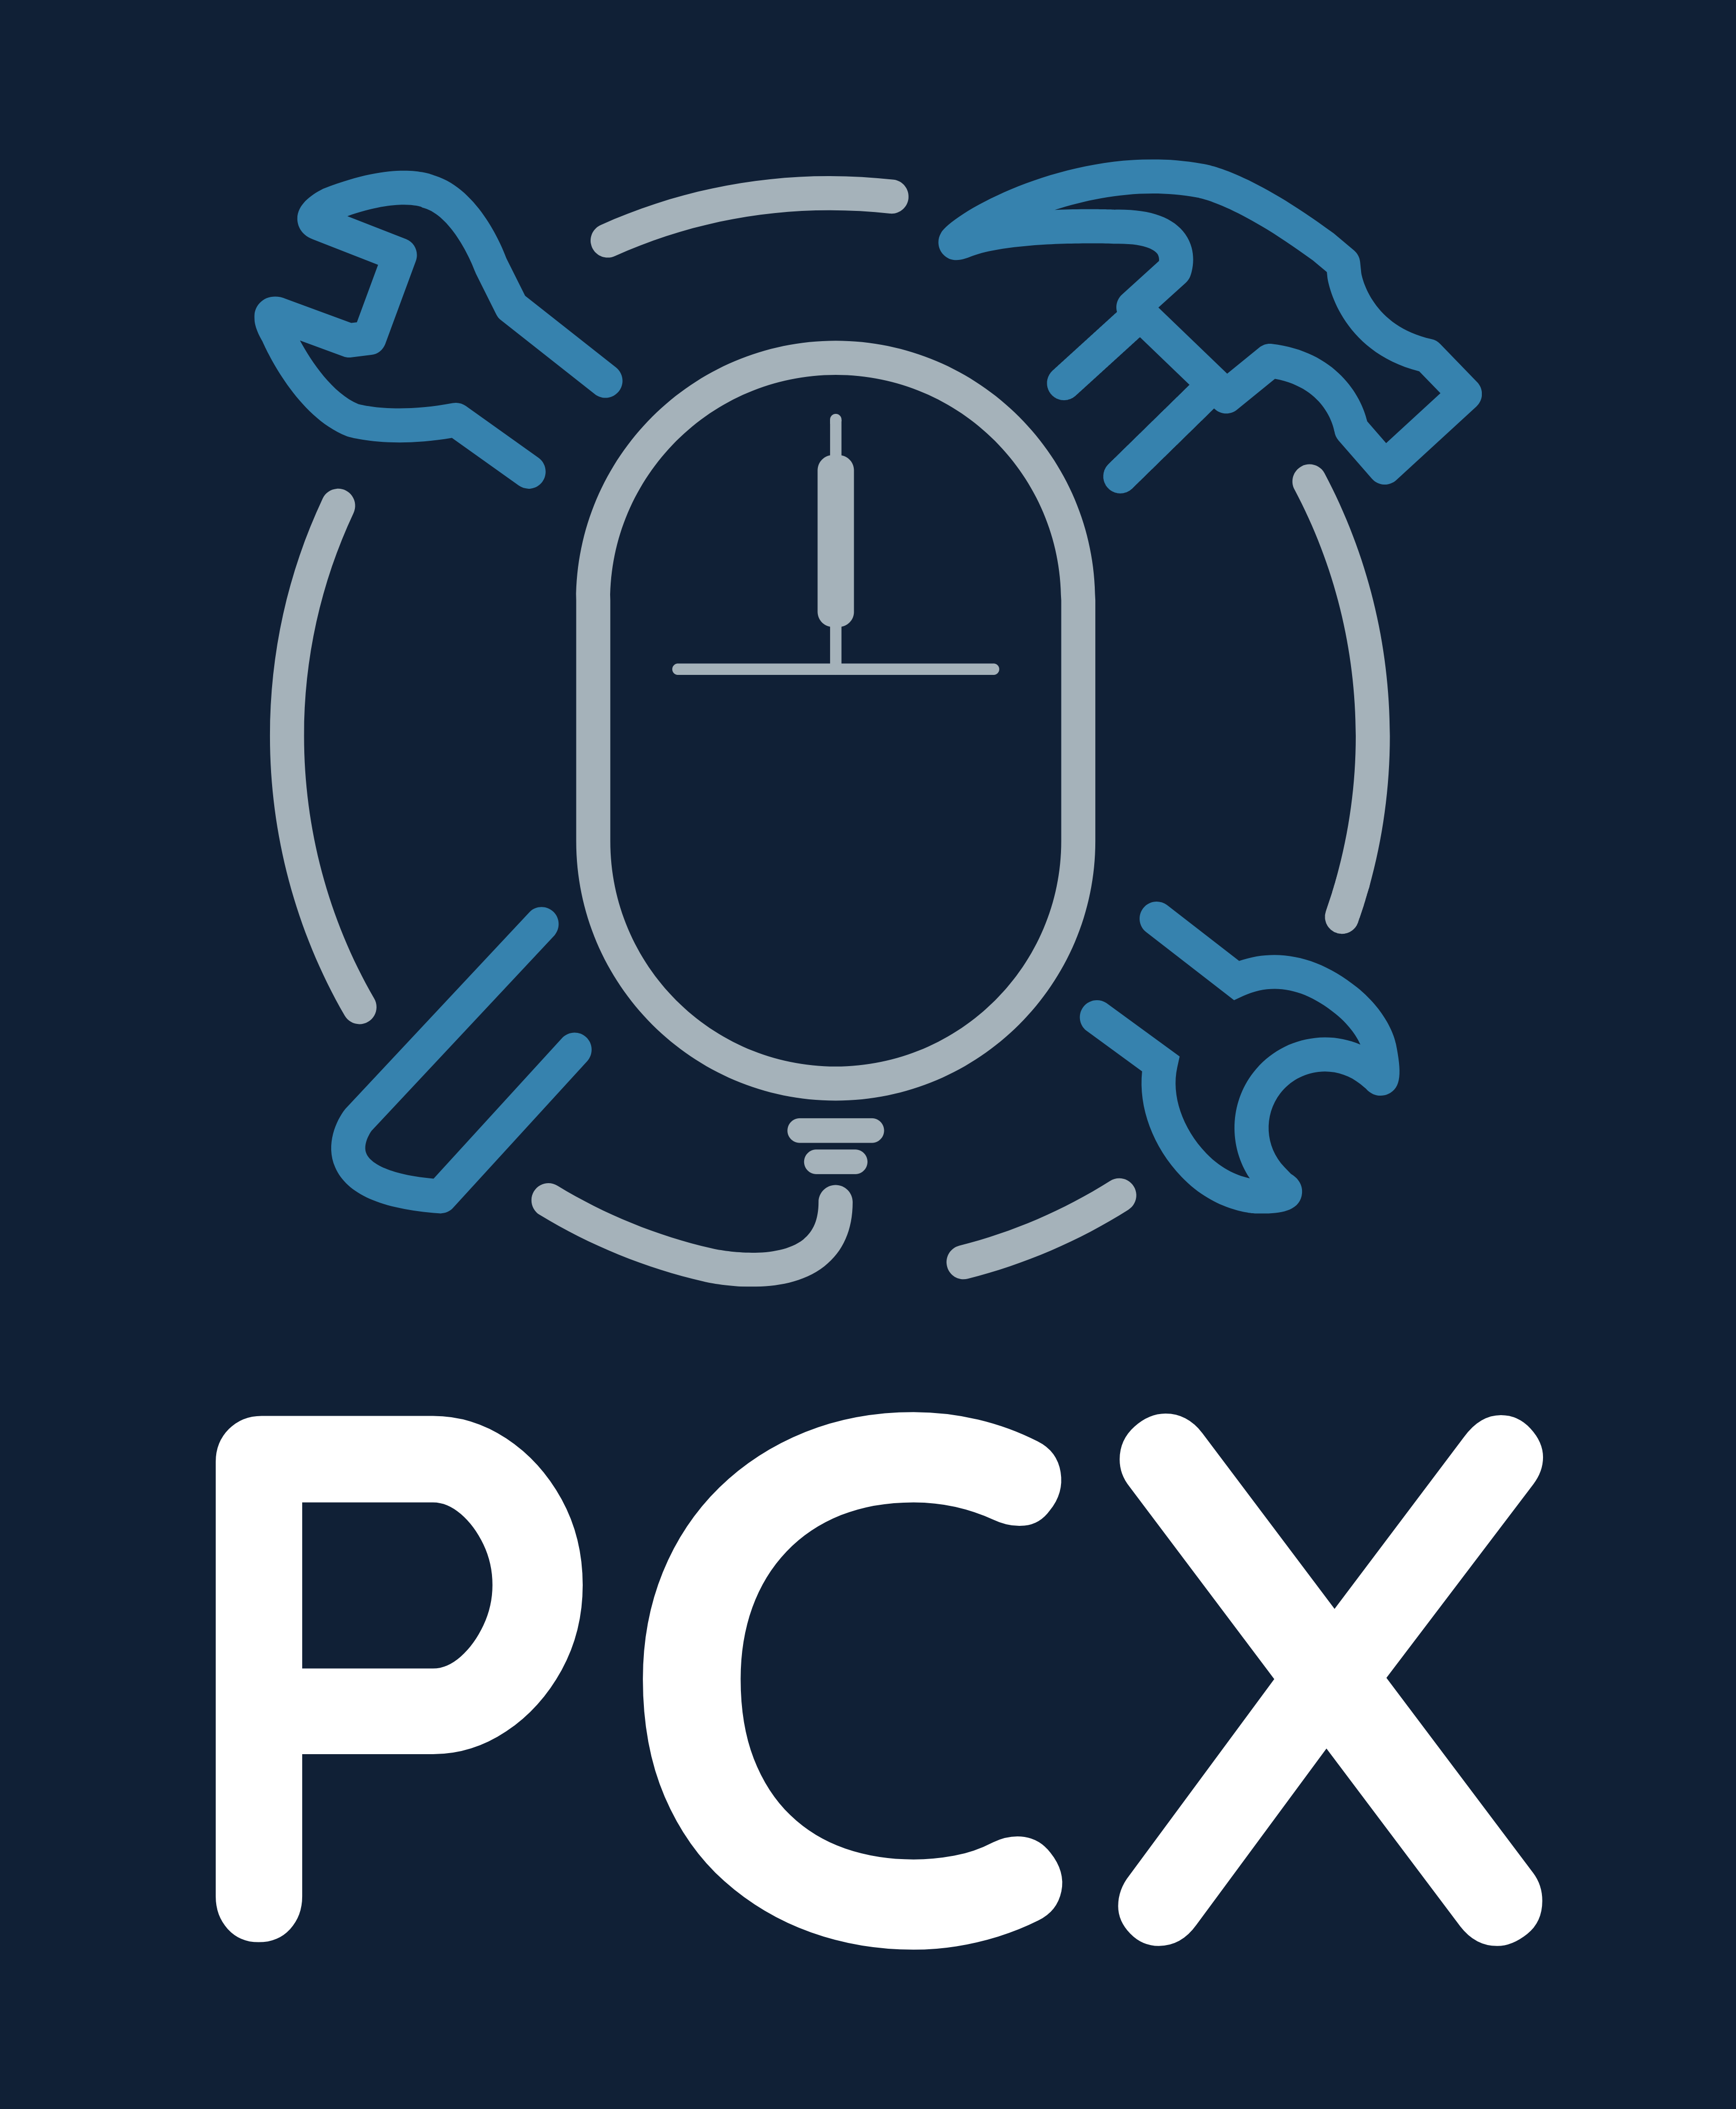 PCX